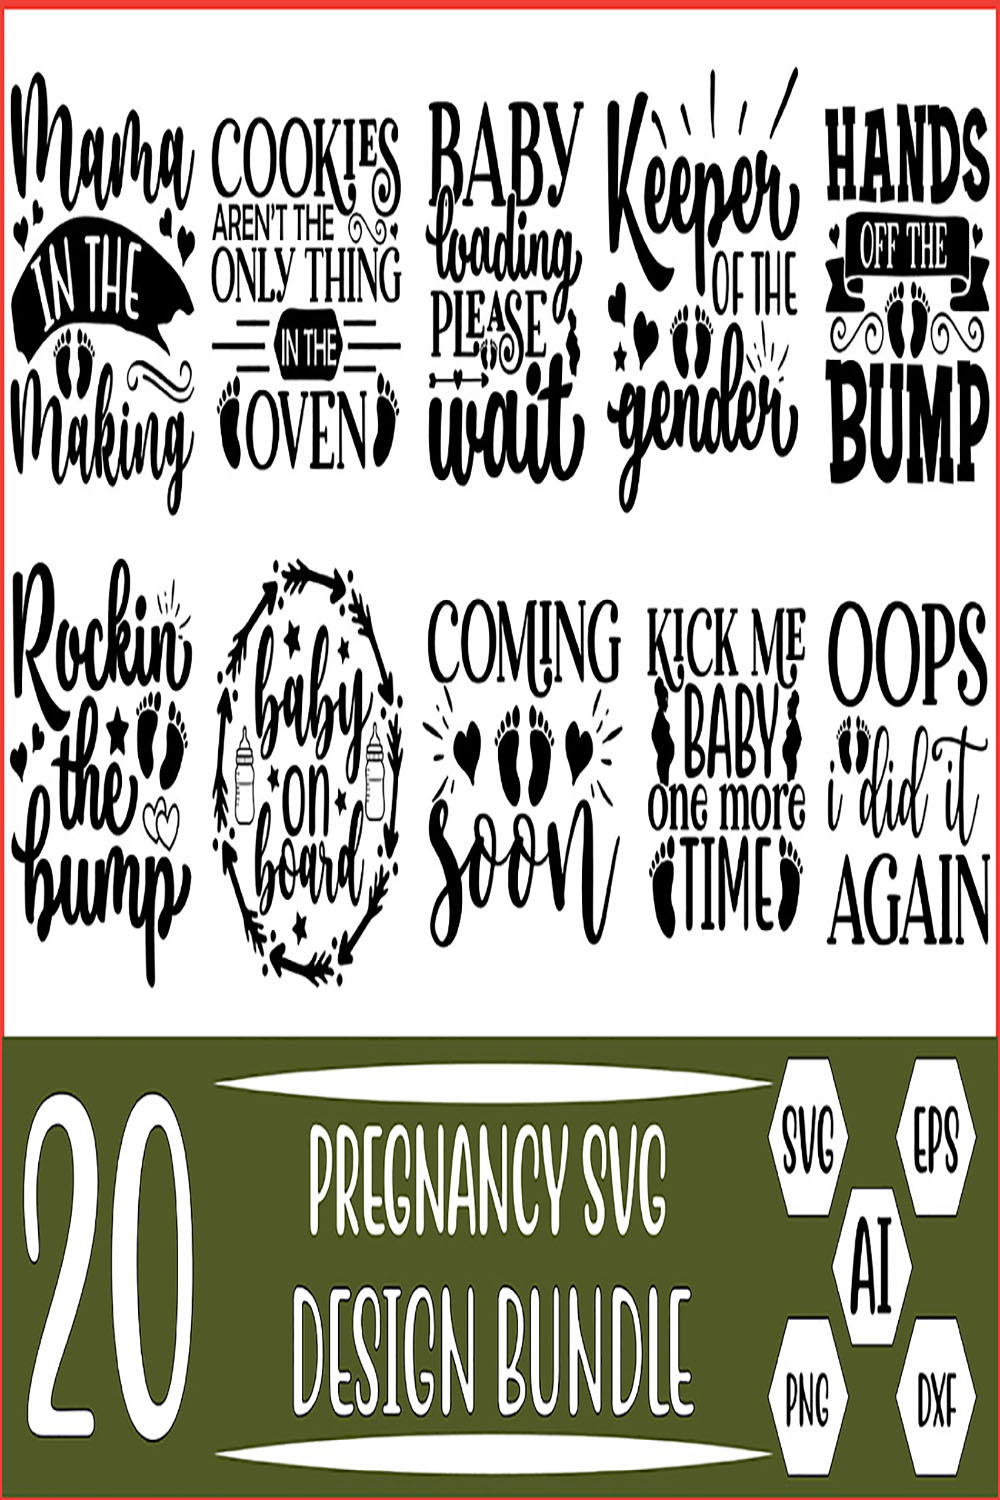 20 Pregnancy SVG Bundle Designs Vector Template pinterest preview image.